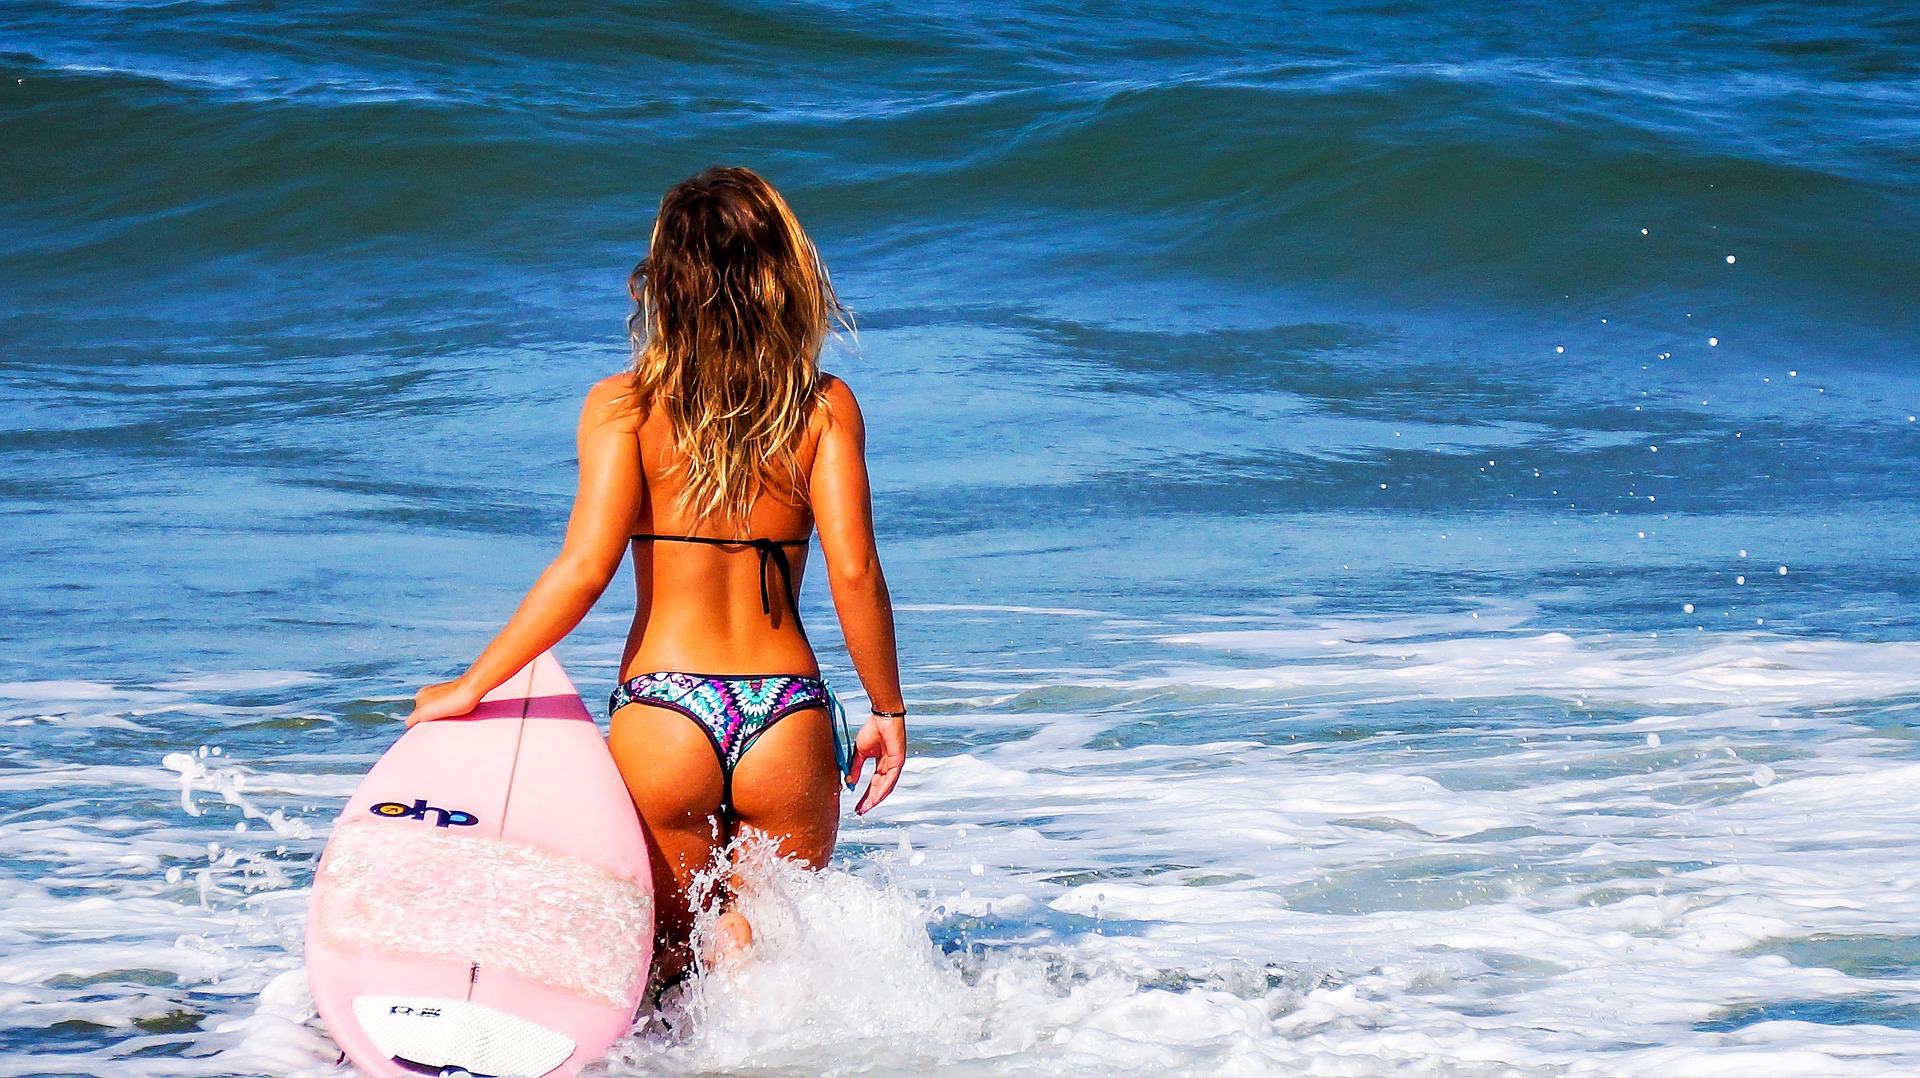 5 Most Impressive Surf Spots in Australia